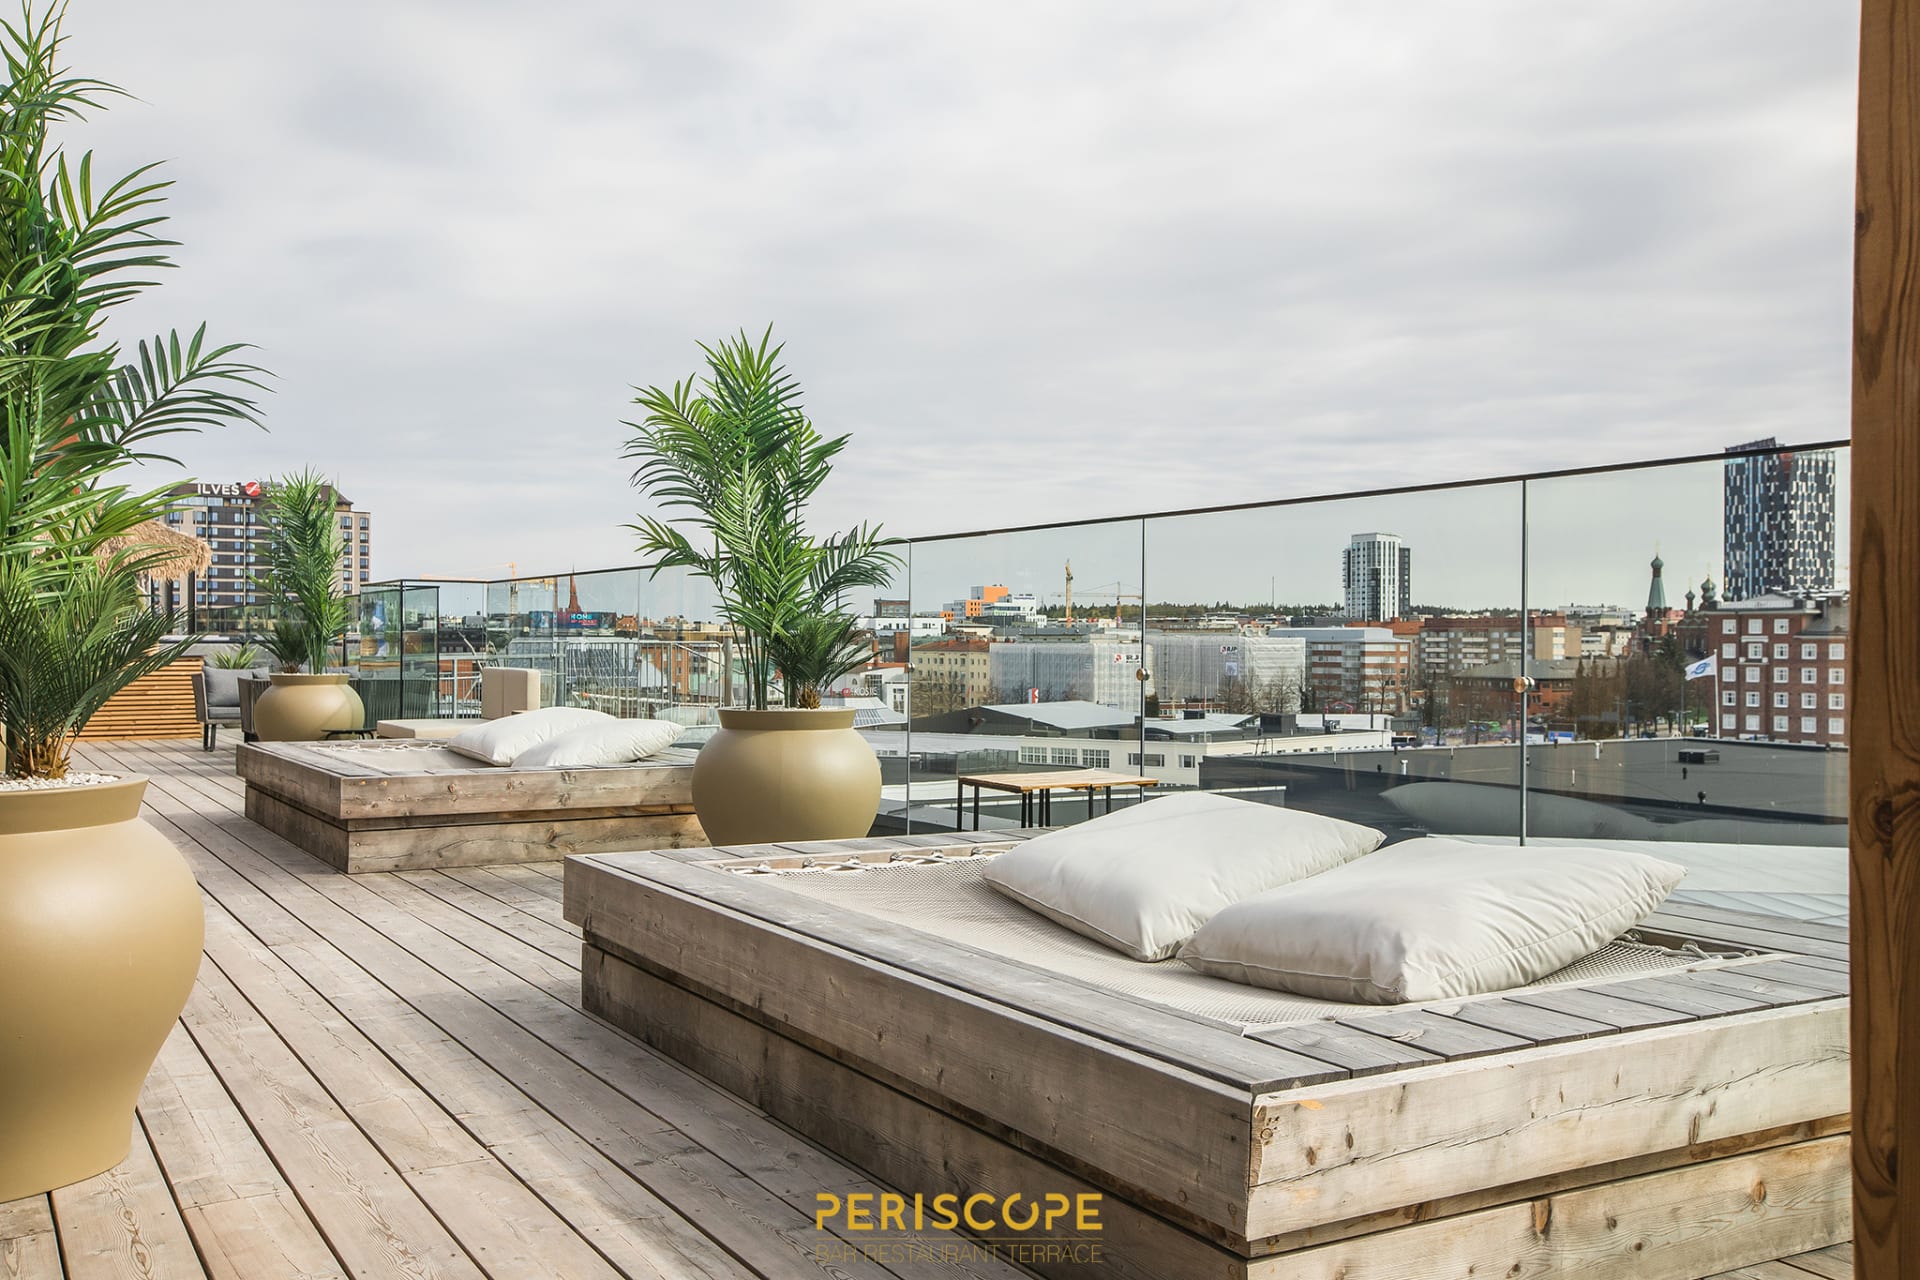 Periscope Spa - Sunbeds on the terrace / Aurinkopedit terassilla